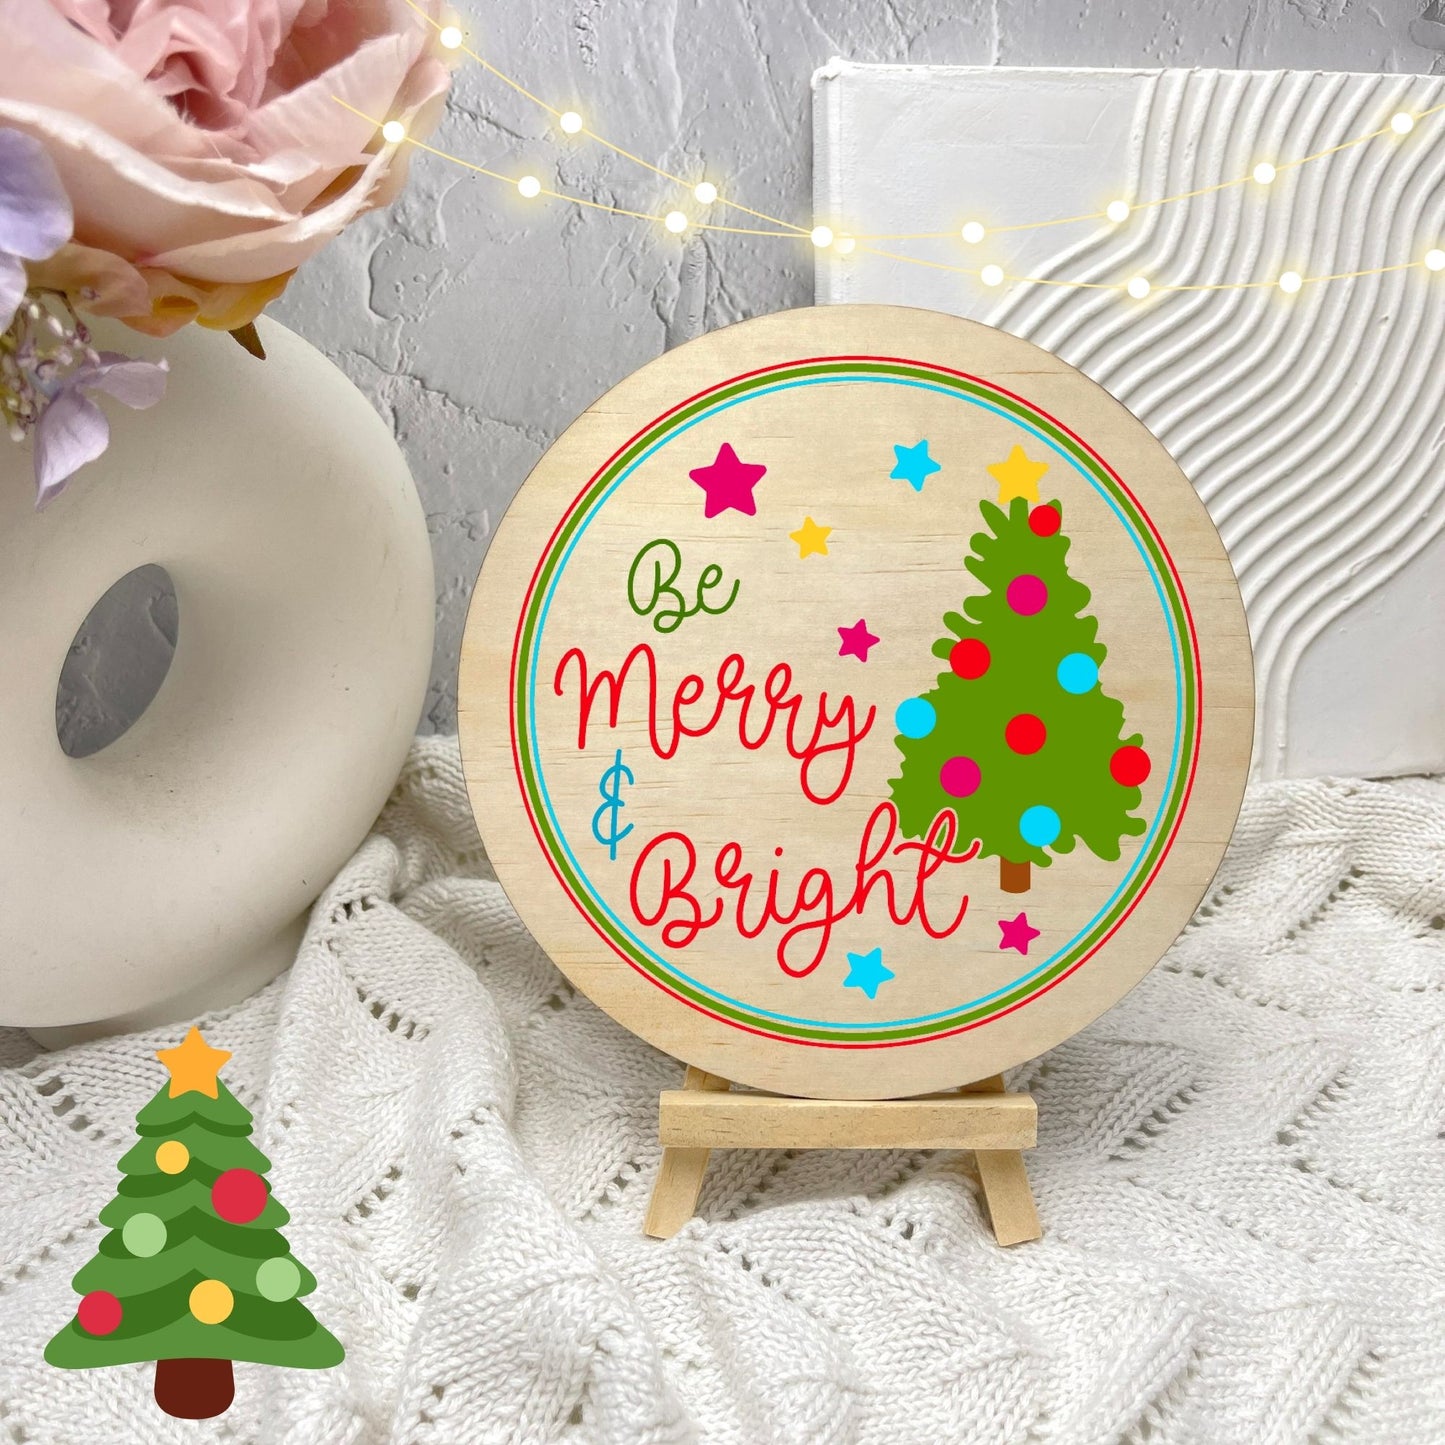 Be Merry and Bright Sign, Seasonal Decor, Holidays decor, Christmas Decor, festive decorations c20